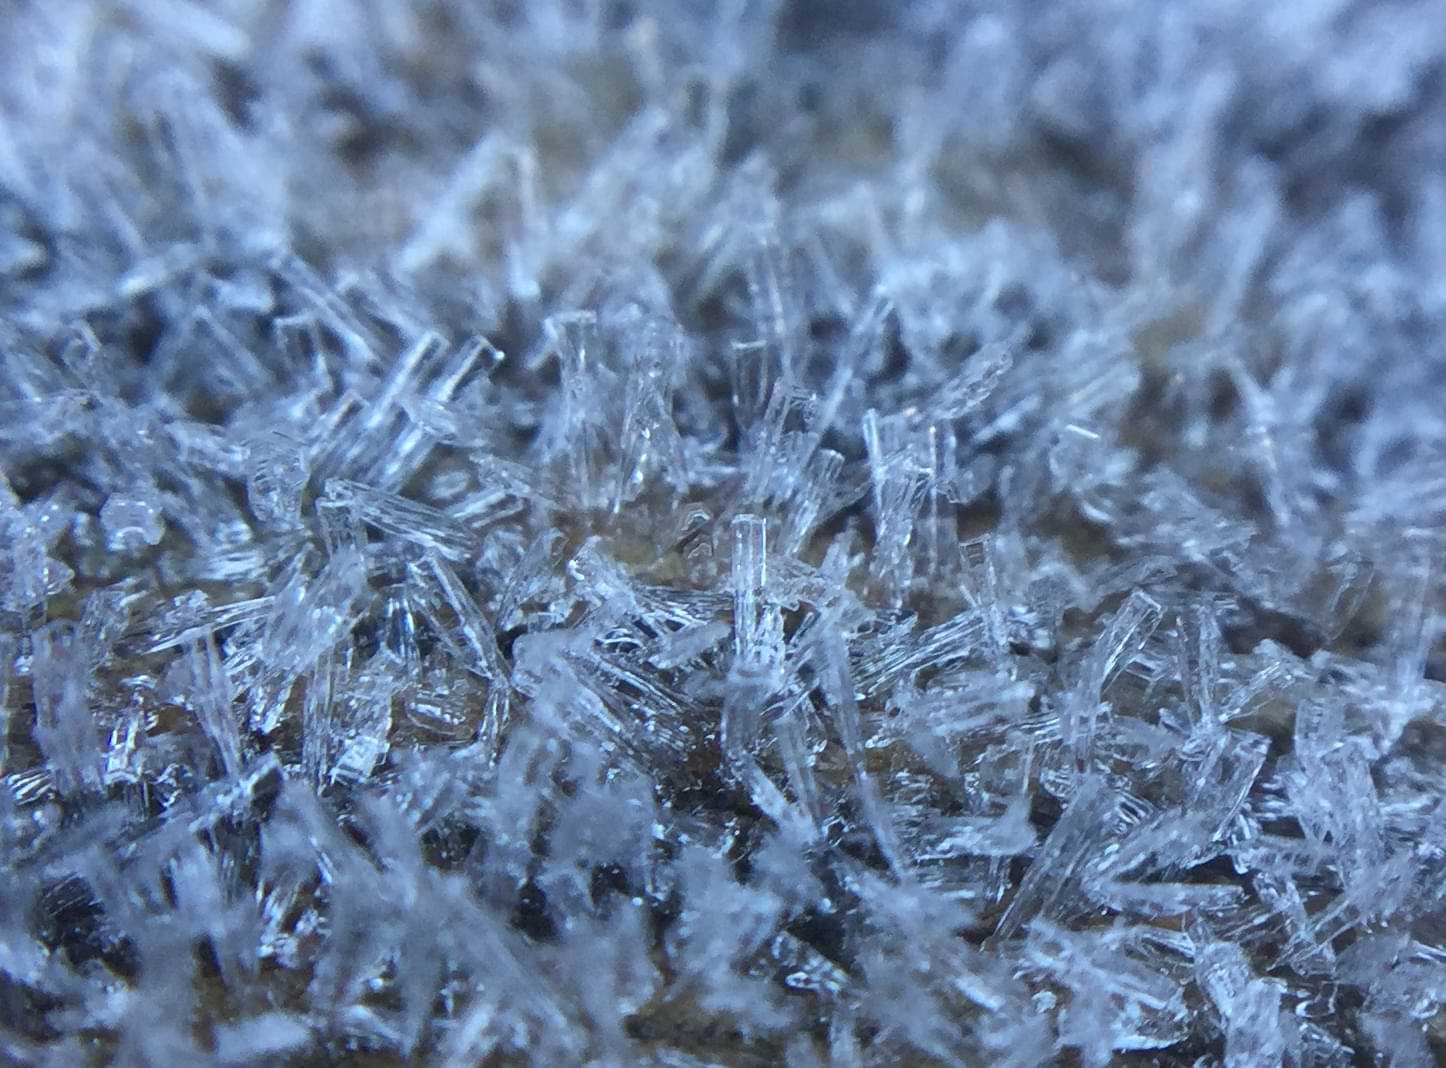 A macro photo of long thin ice crystals growing out of a log at various jagged angles.